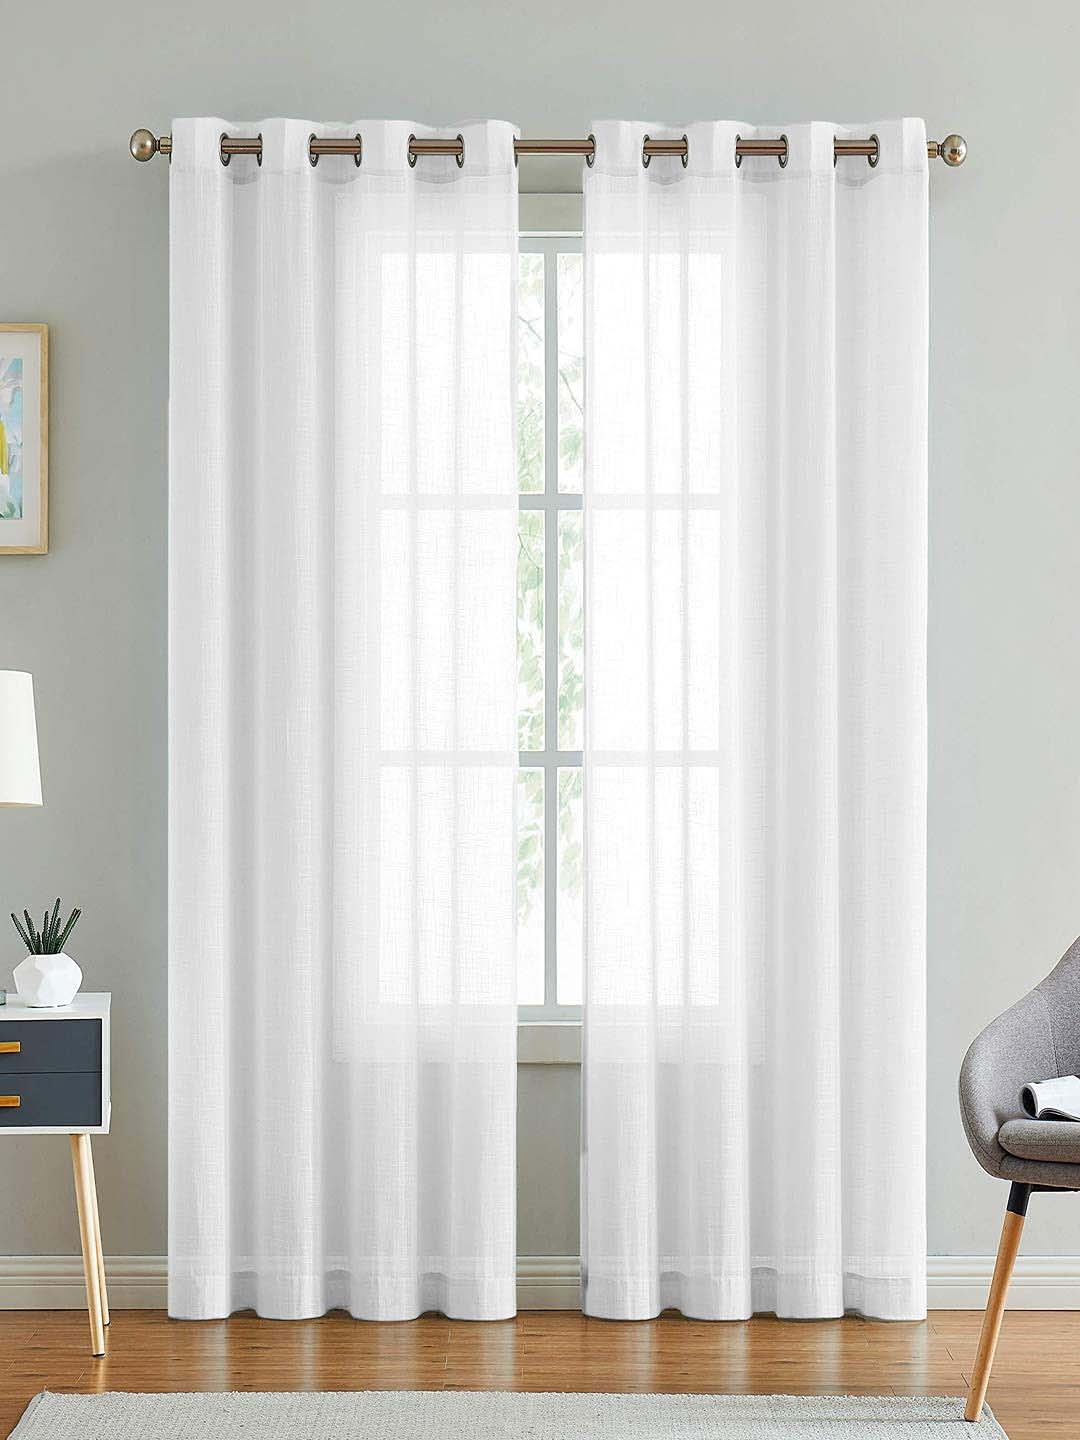 LINENWALAS Happy Sleeping Set Of 2 White Sheer Door Curtains